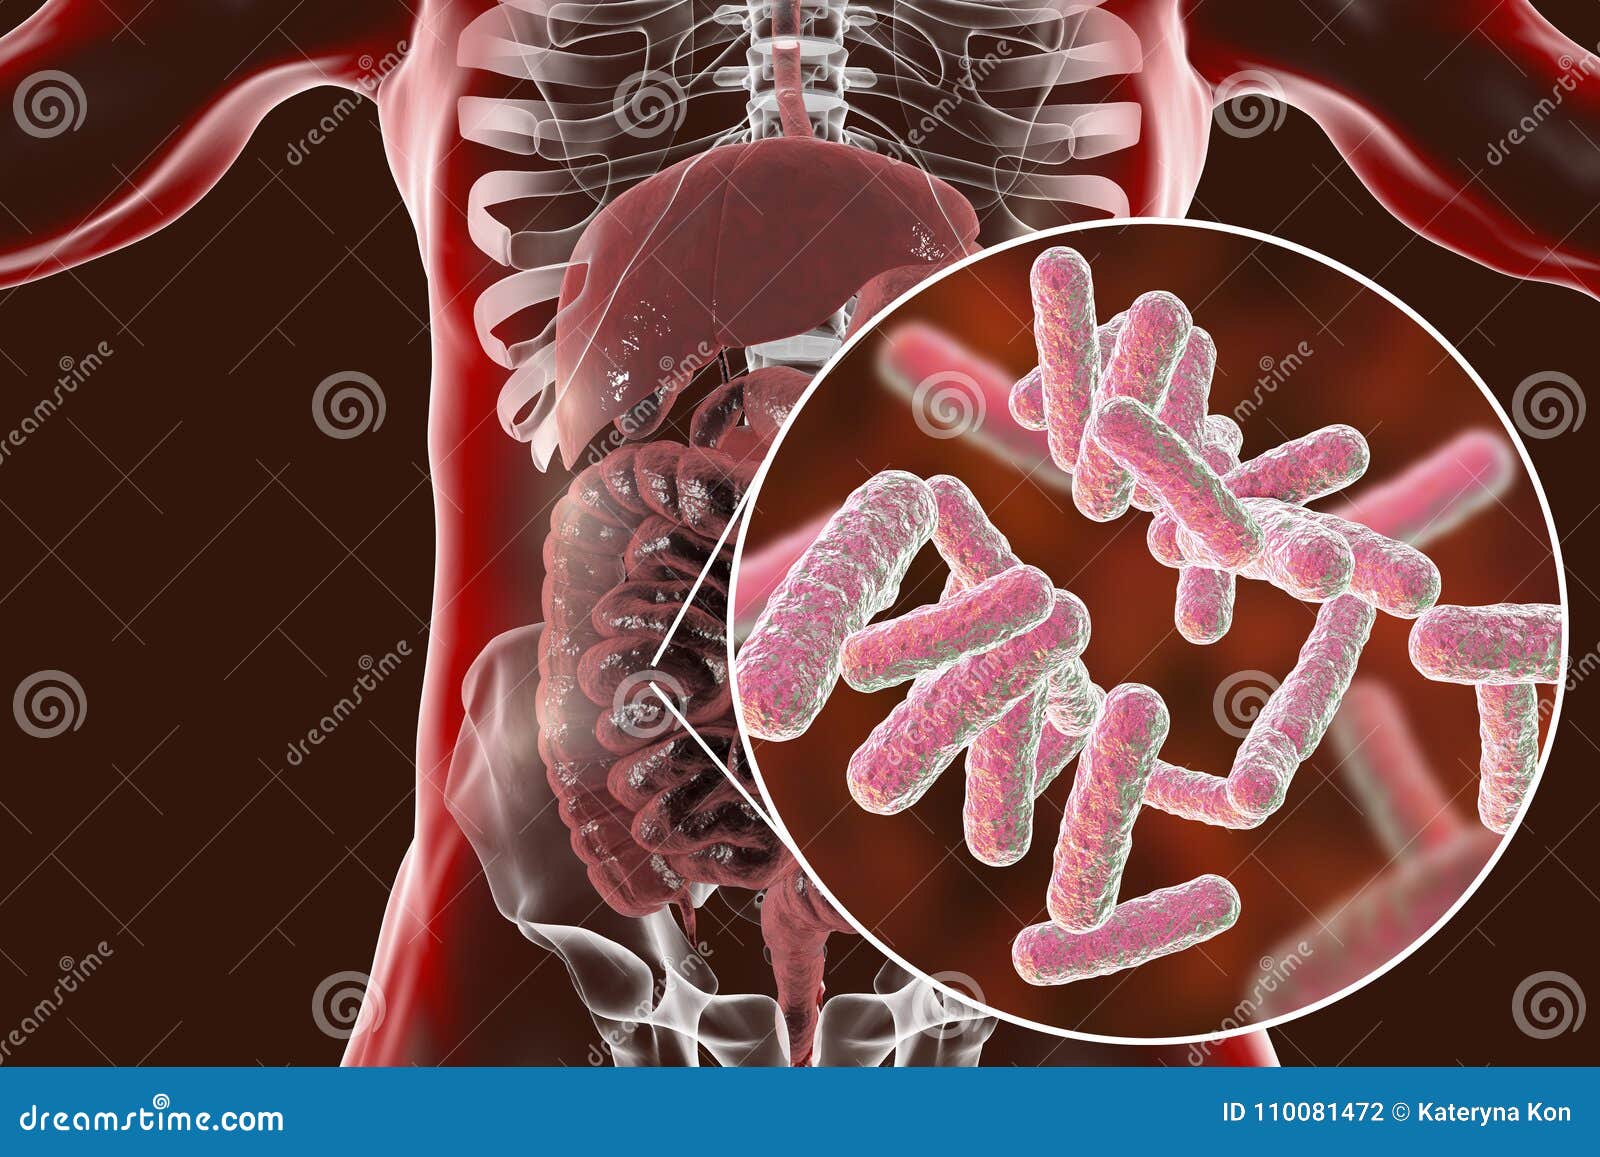 intestinal microbiome, close-up view of enteric bacteria